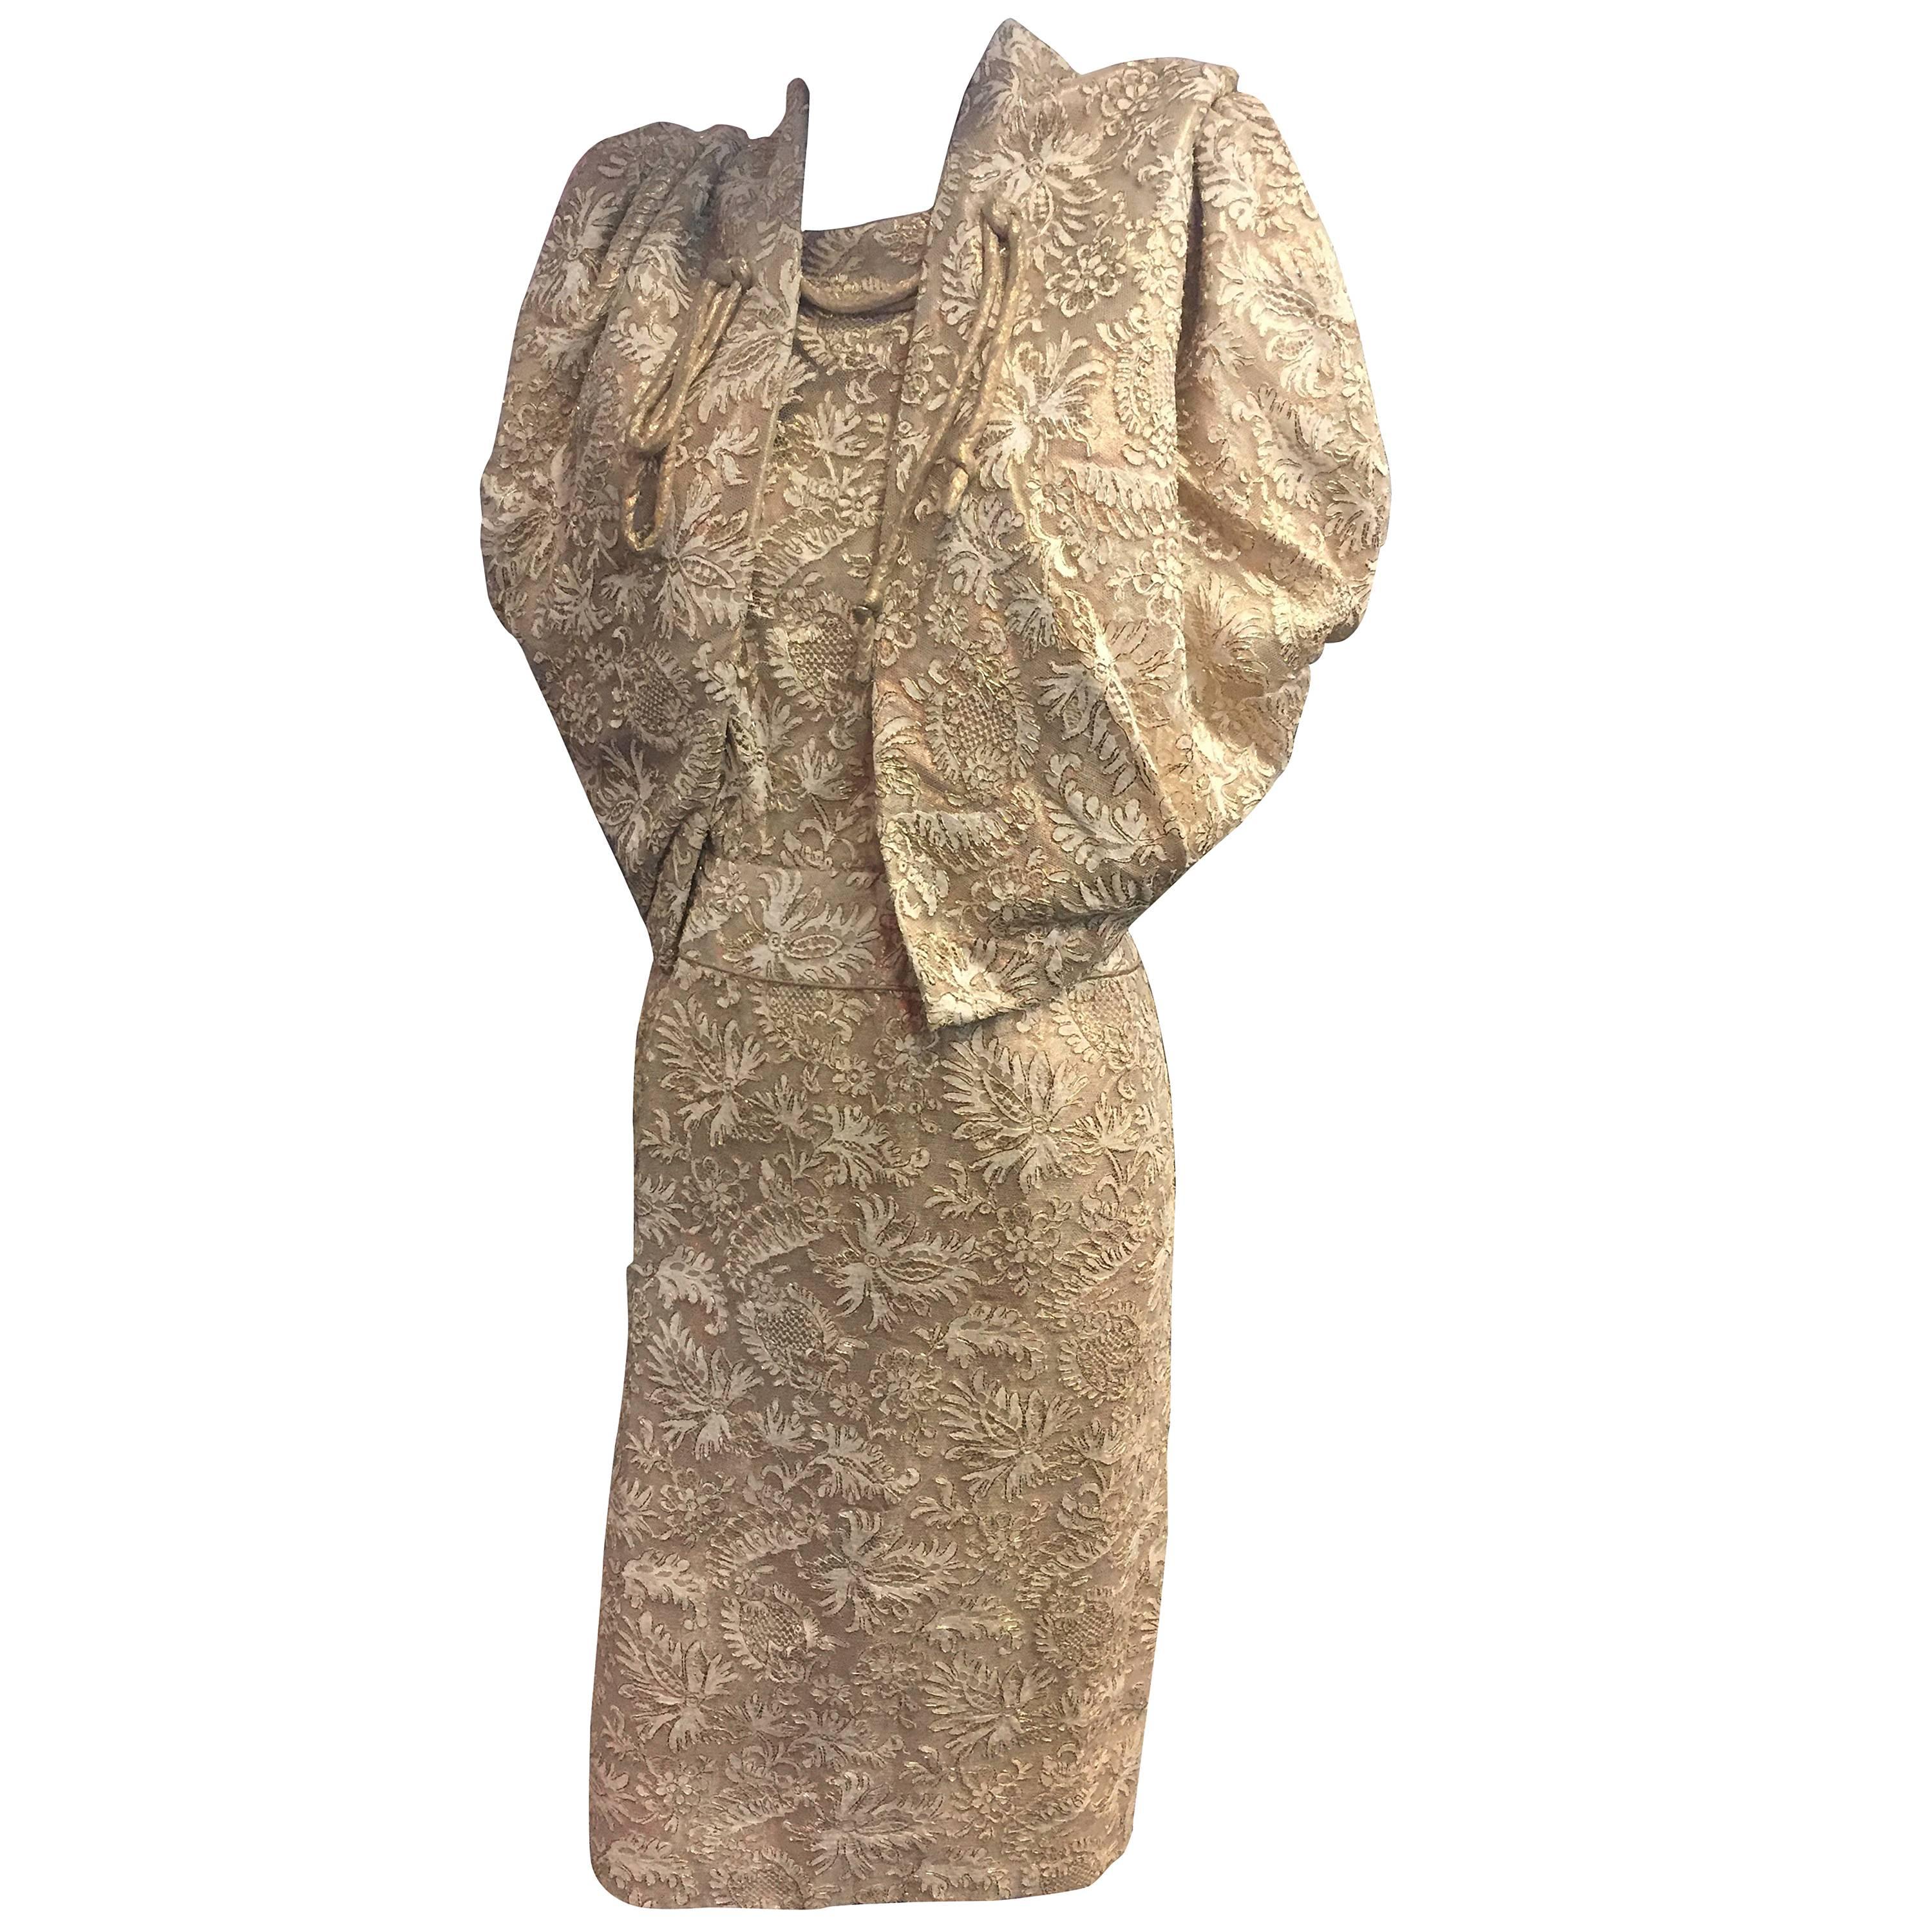 Exquisite 1950s Don Loper Gold Lamé Lace Sheath Dress w Matching Cocoon Bolero